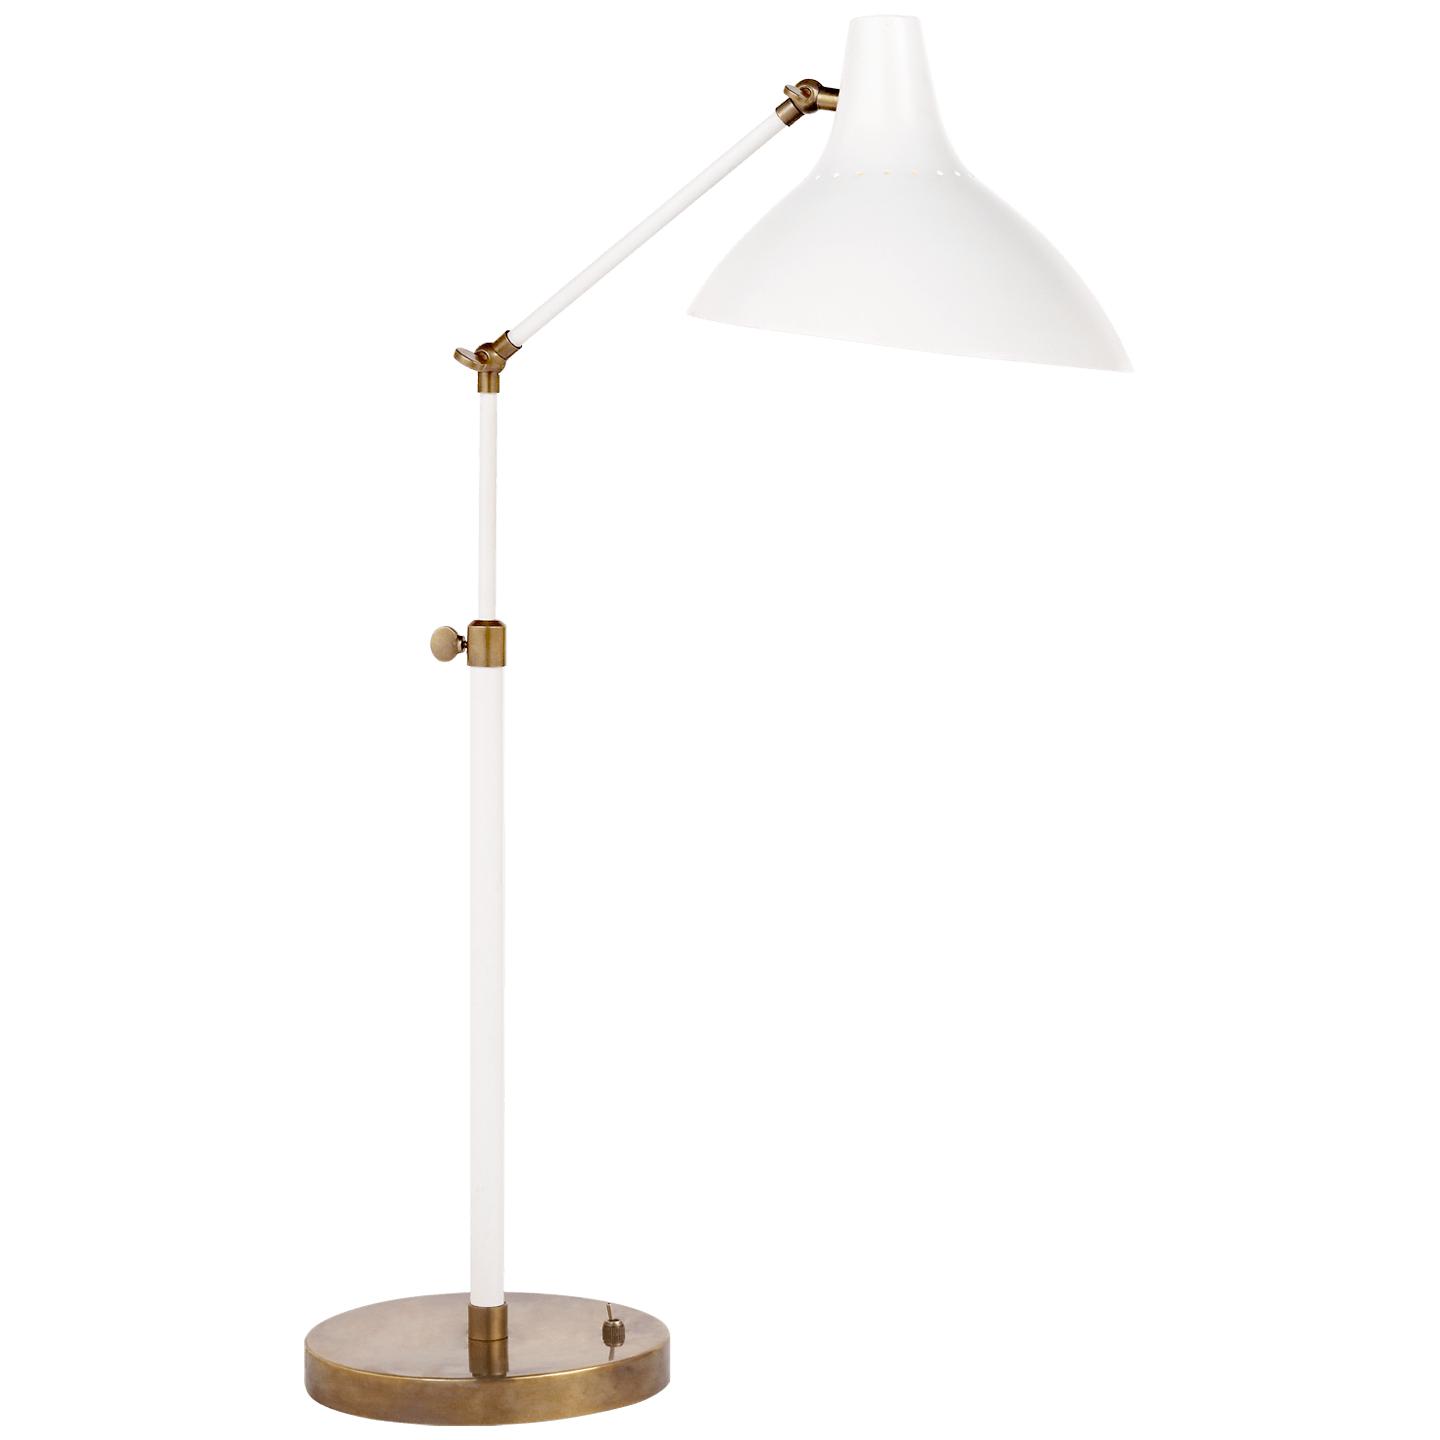 Купить Настольная лампа Charlton Table Lamp в интернет-магазине roooms.ru